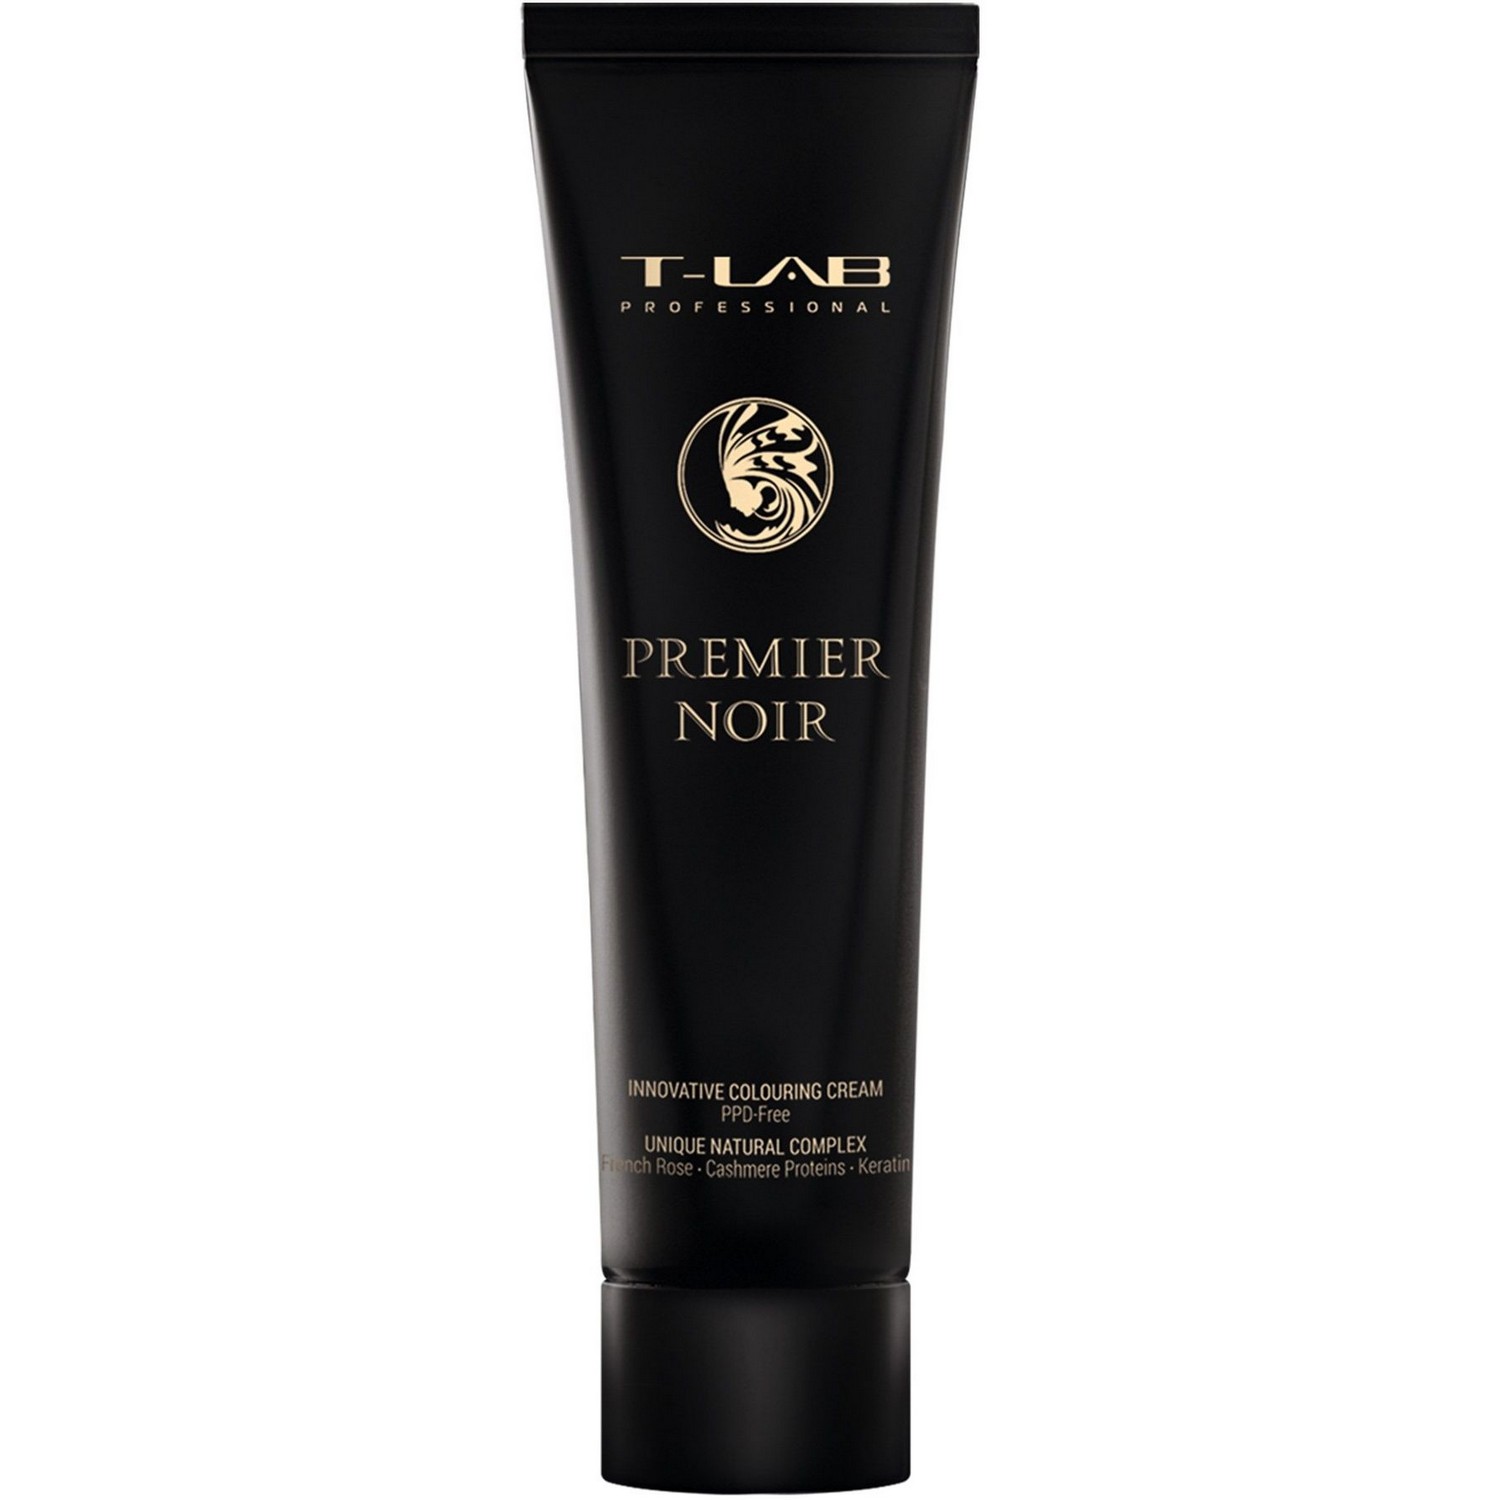 Крем-краска T-LAB Professional Premier Noir colouring cream, оттенок 7.3 (golden blonde) - фото 1